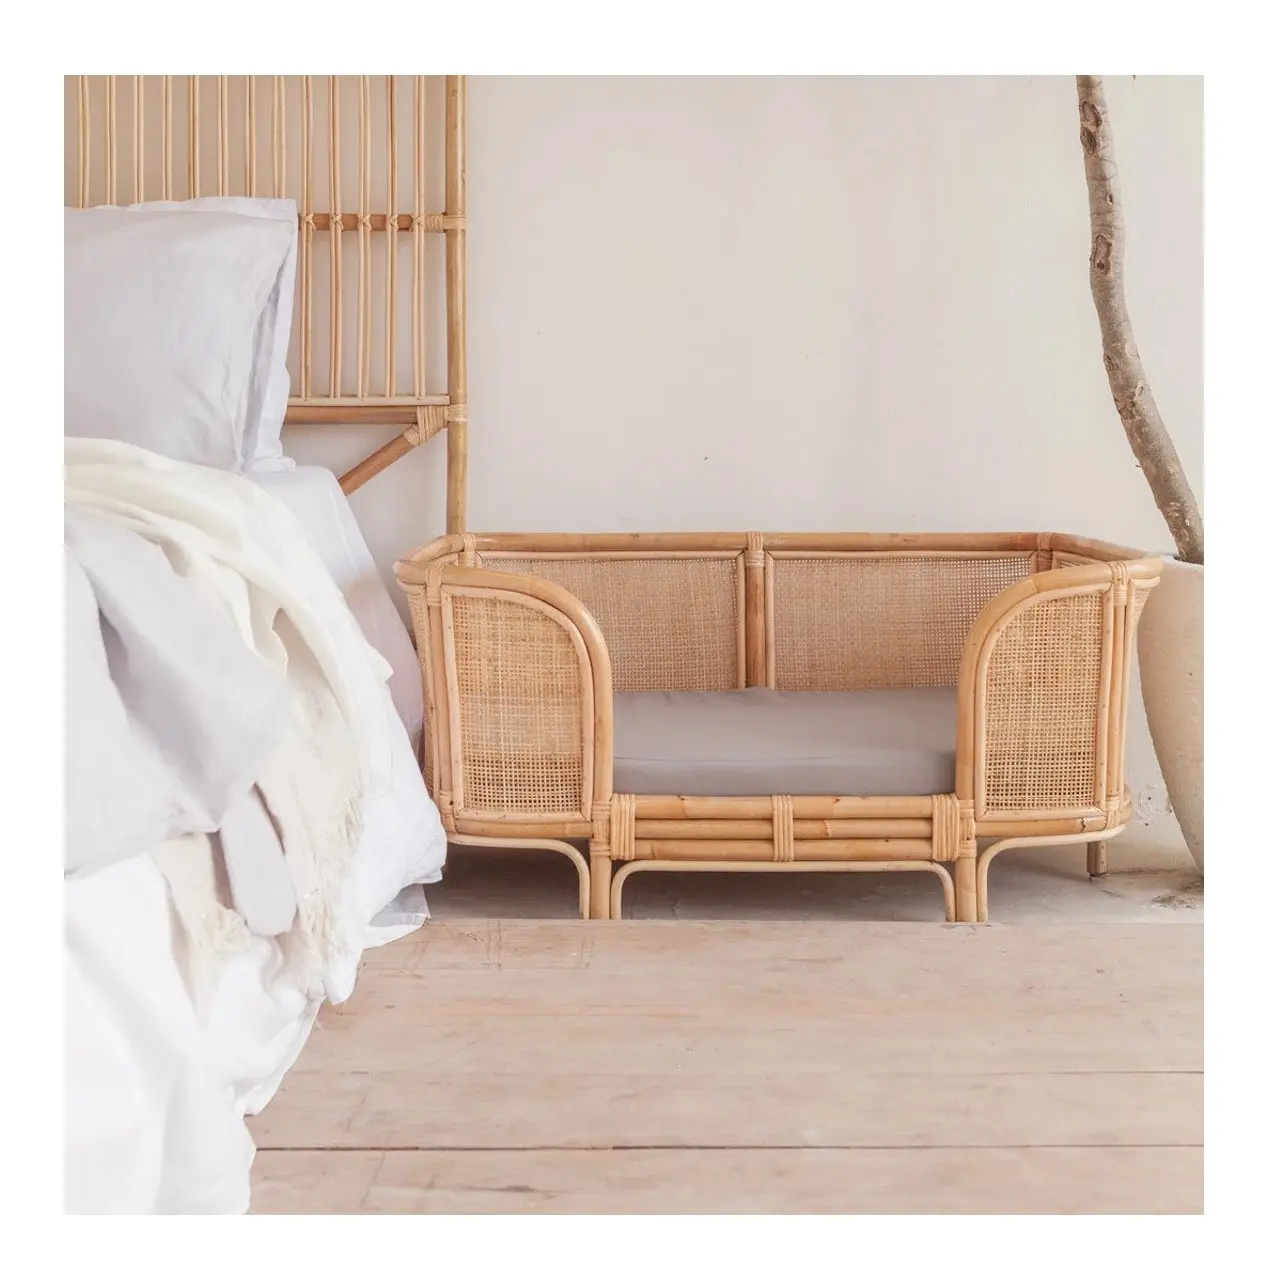 Natural handmade wicker rattan dog beds animal bedding pet furniture